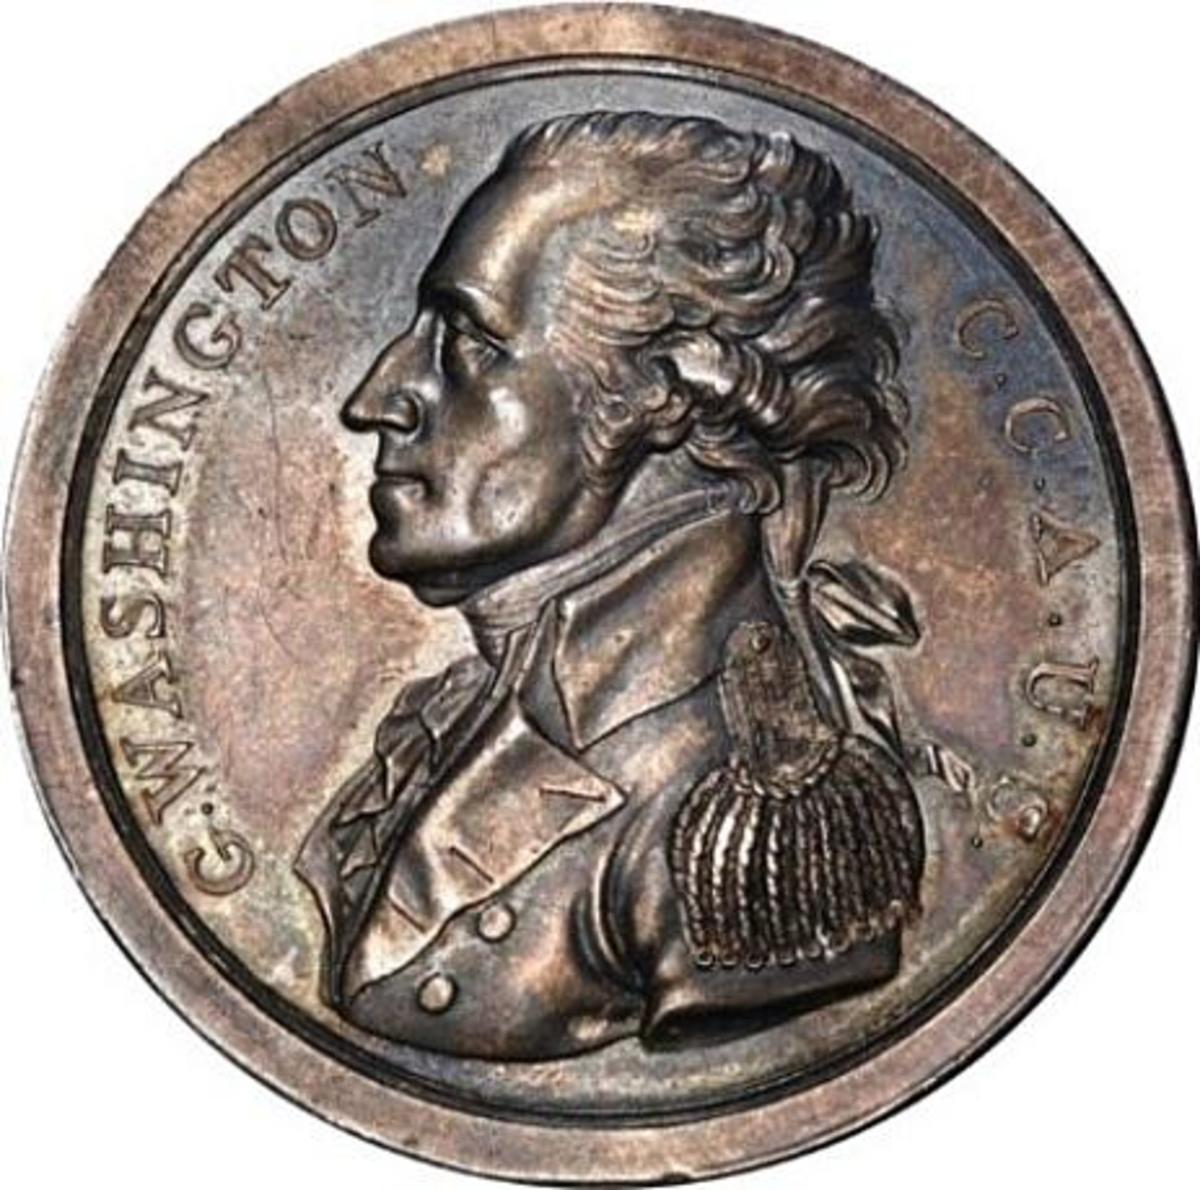 George Washington medal.